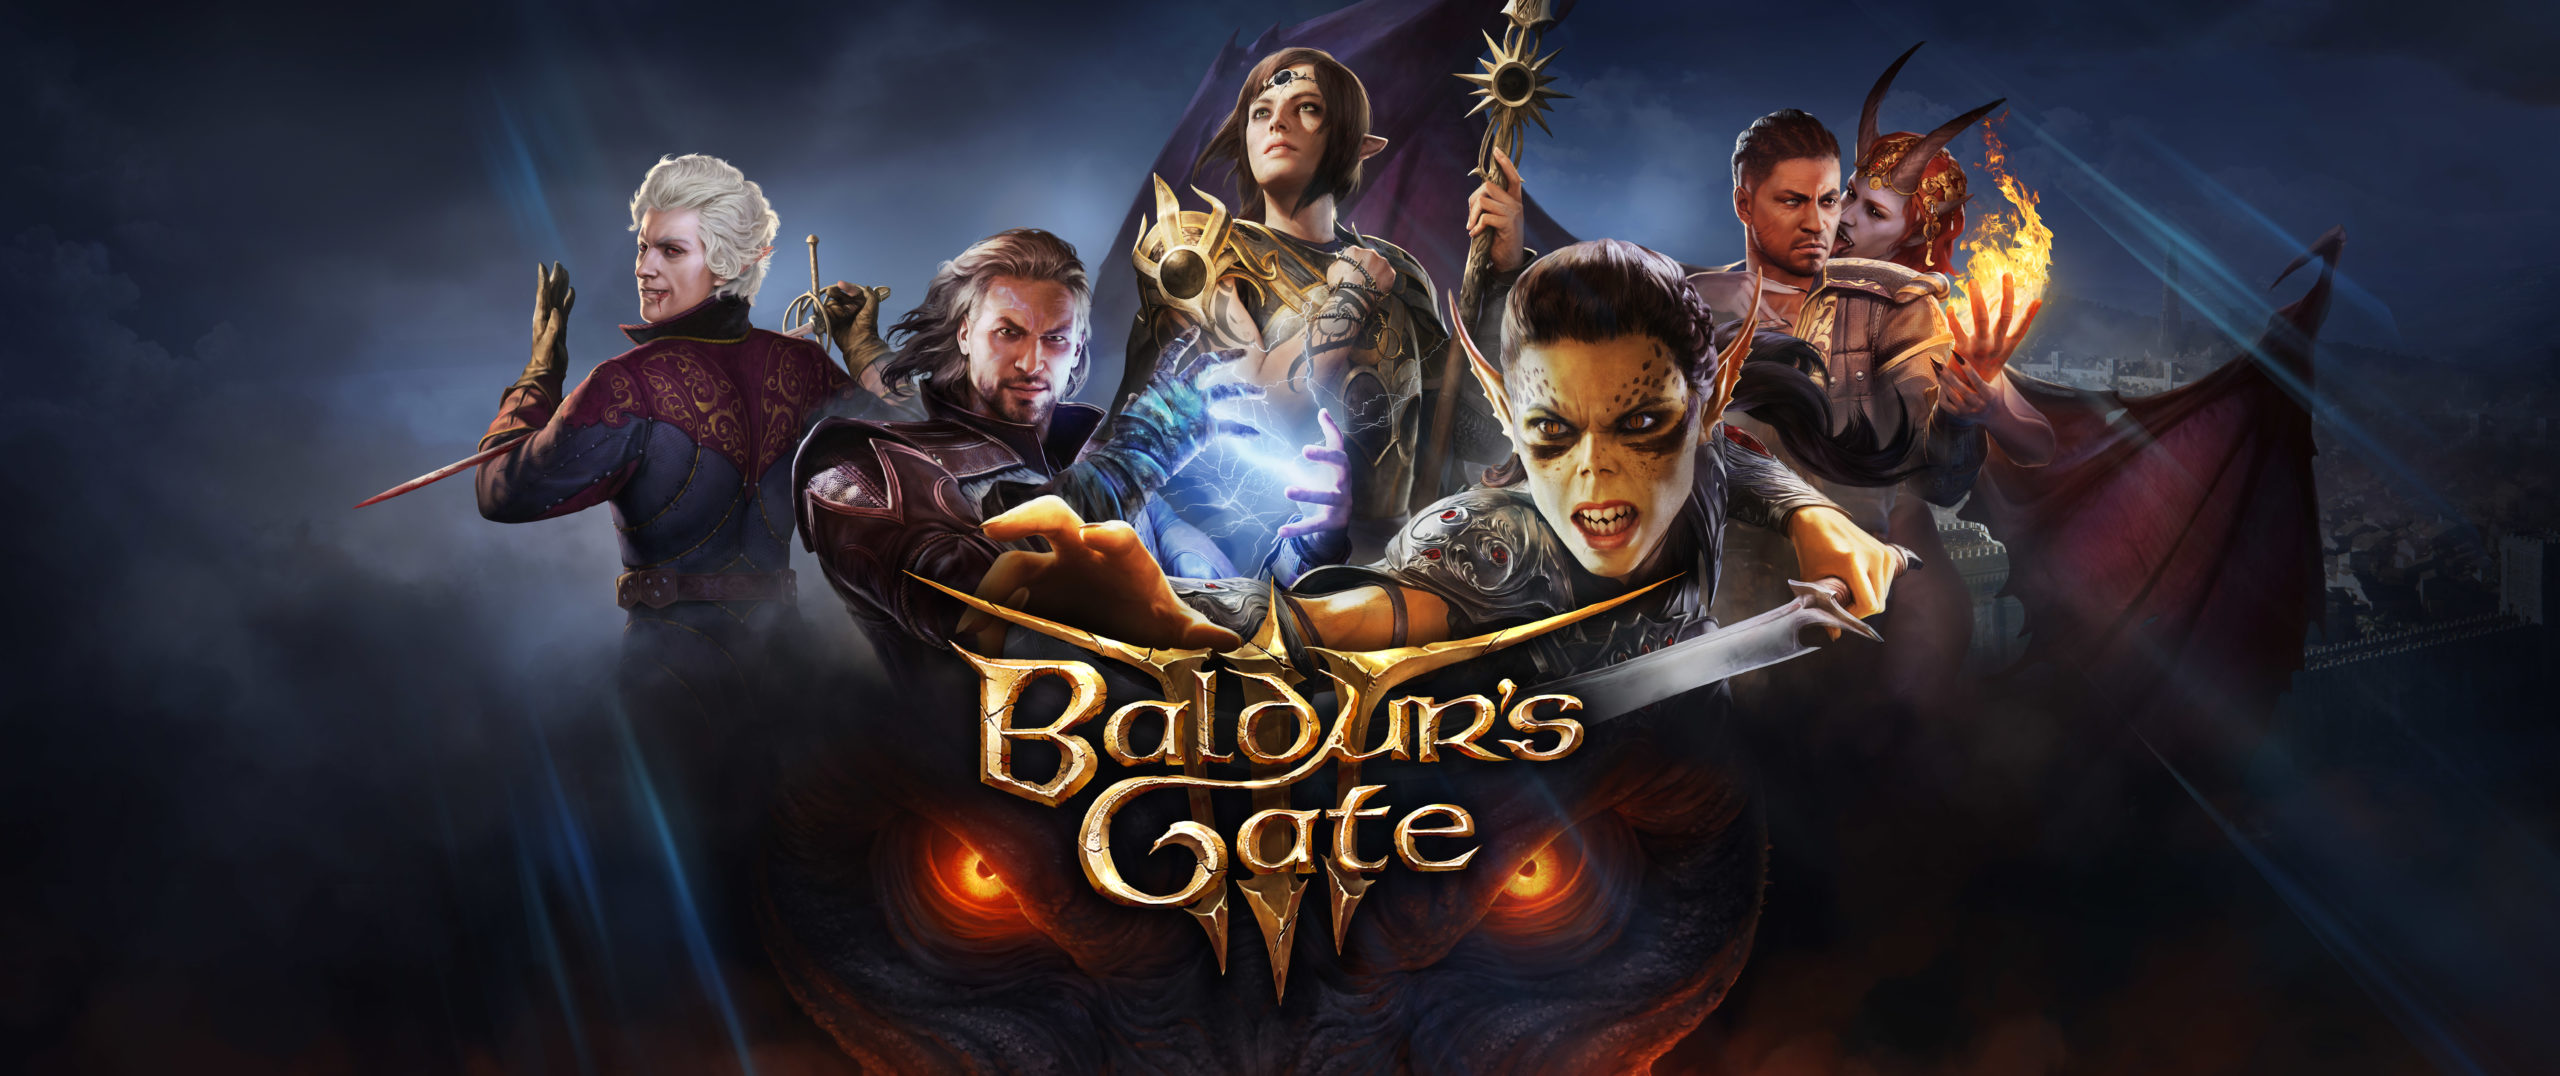 BALDUR’S GATE 3 Makes Its Grand Debut, Now on Xbox Series X|S